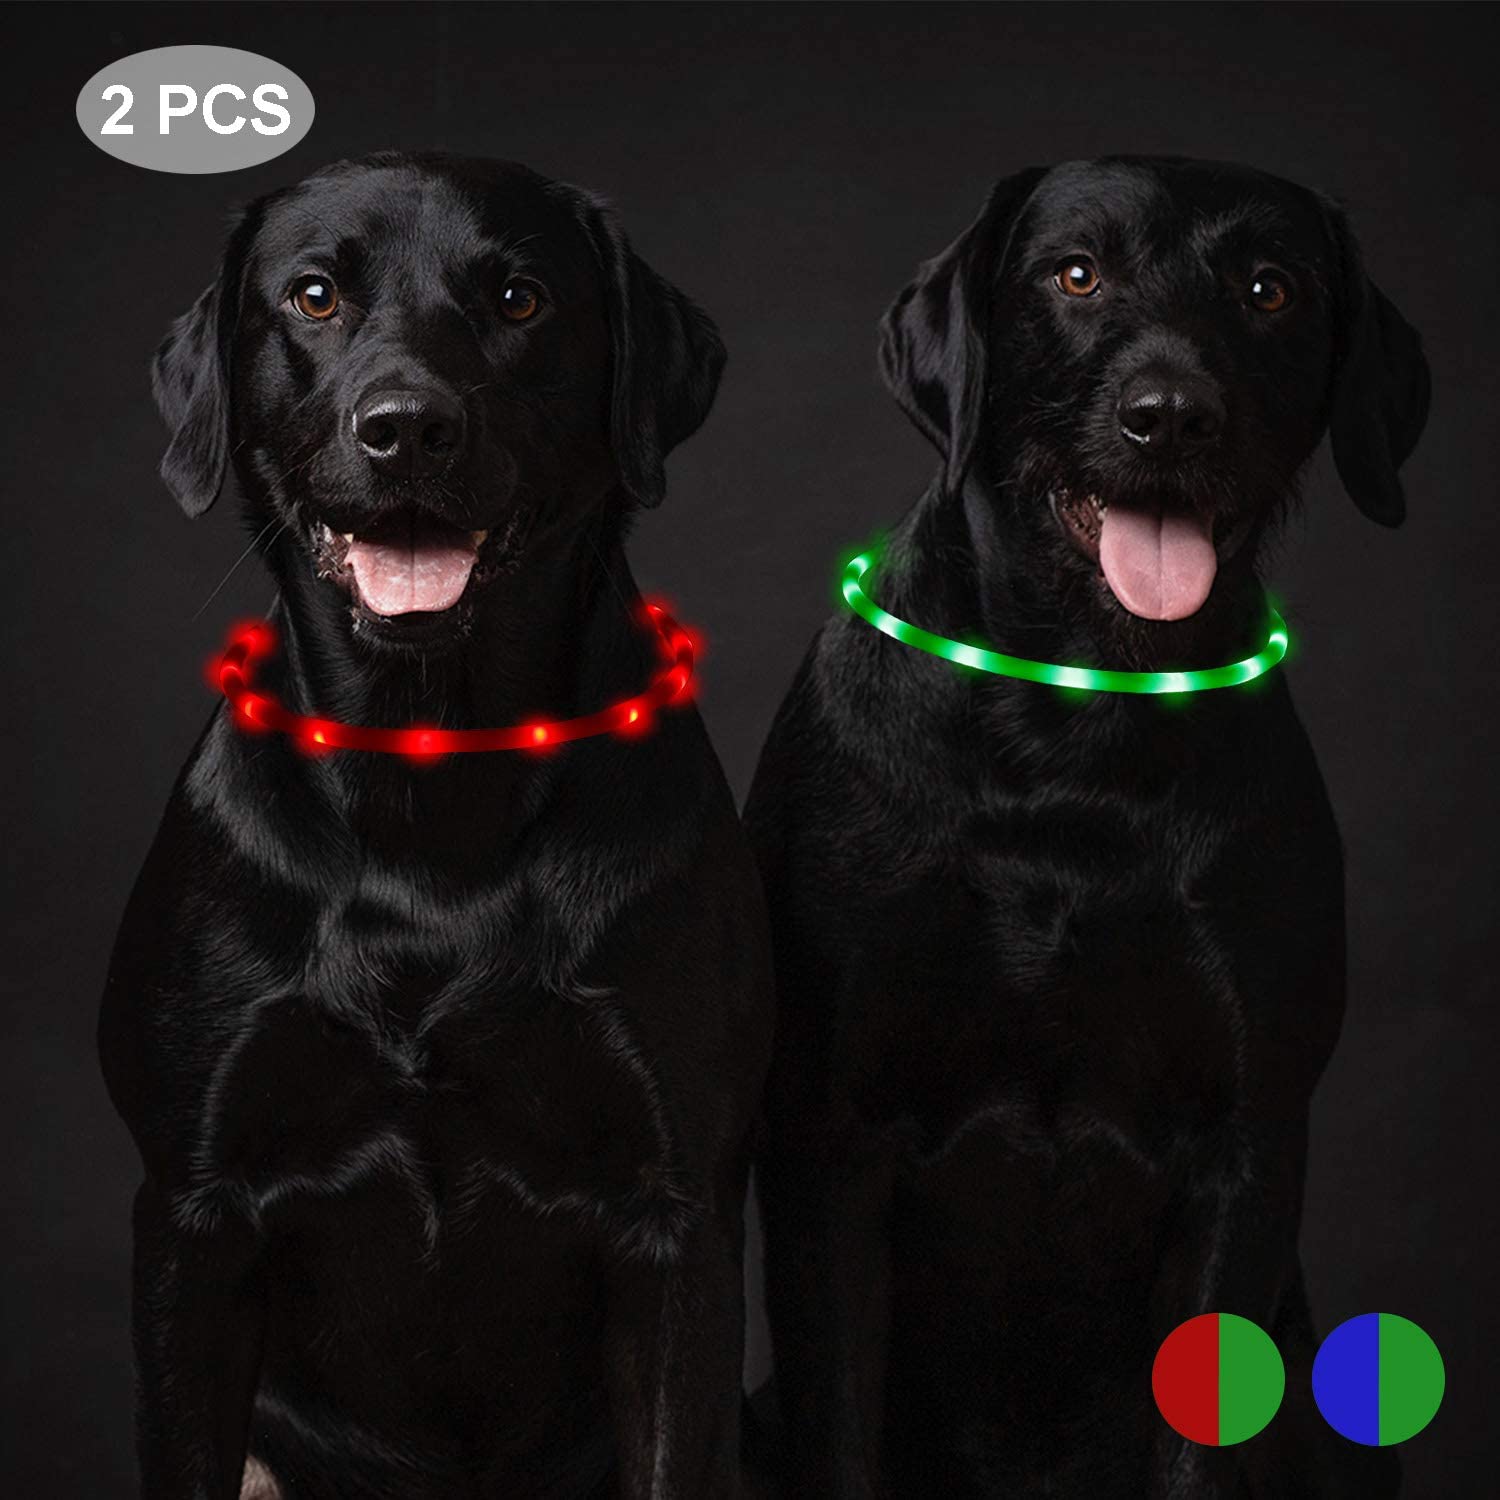  Toozey 2 Pcs Luminoso Collares para Perro LED Durante 20 Horas de Luz Continua Impermeable, USB Recargable Cortable Tira de Luz para Collar de Perro de Seguridad Nocturna - 3 Modo(Verde y Rojo) 